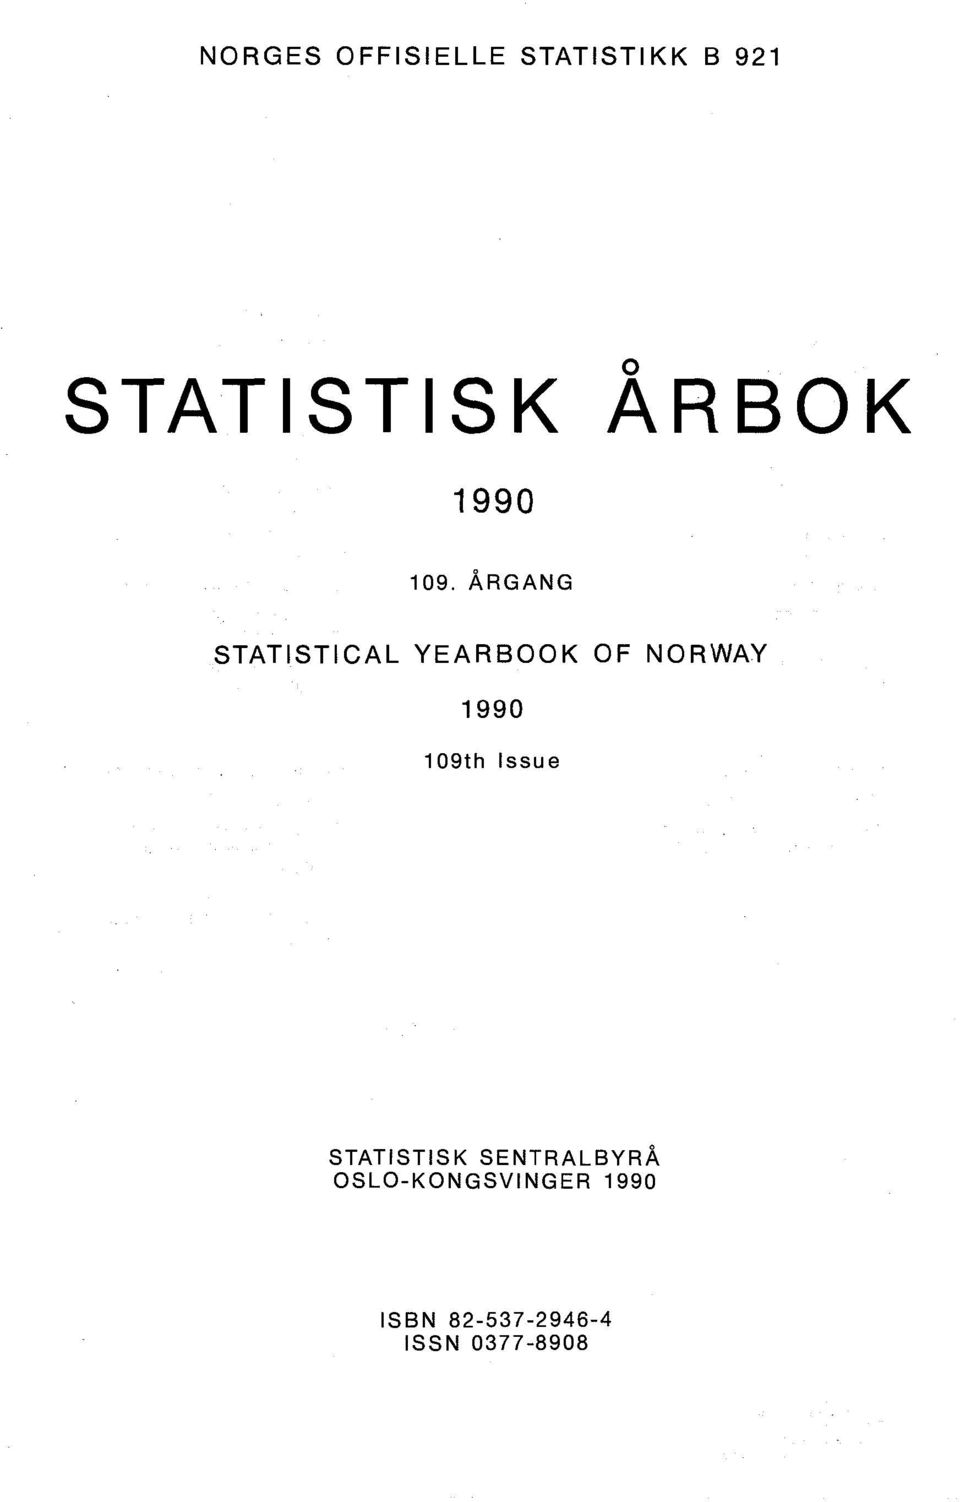 ÅRGANG STATISTICAL YEARBOOK OF NORWAY 1990 109th